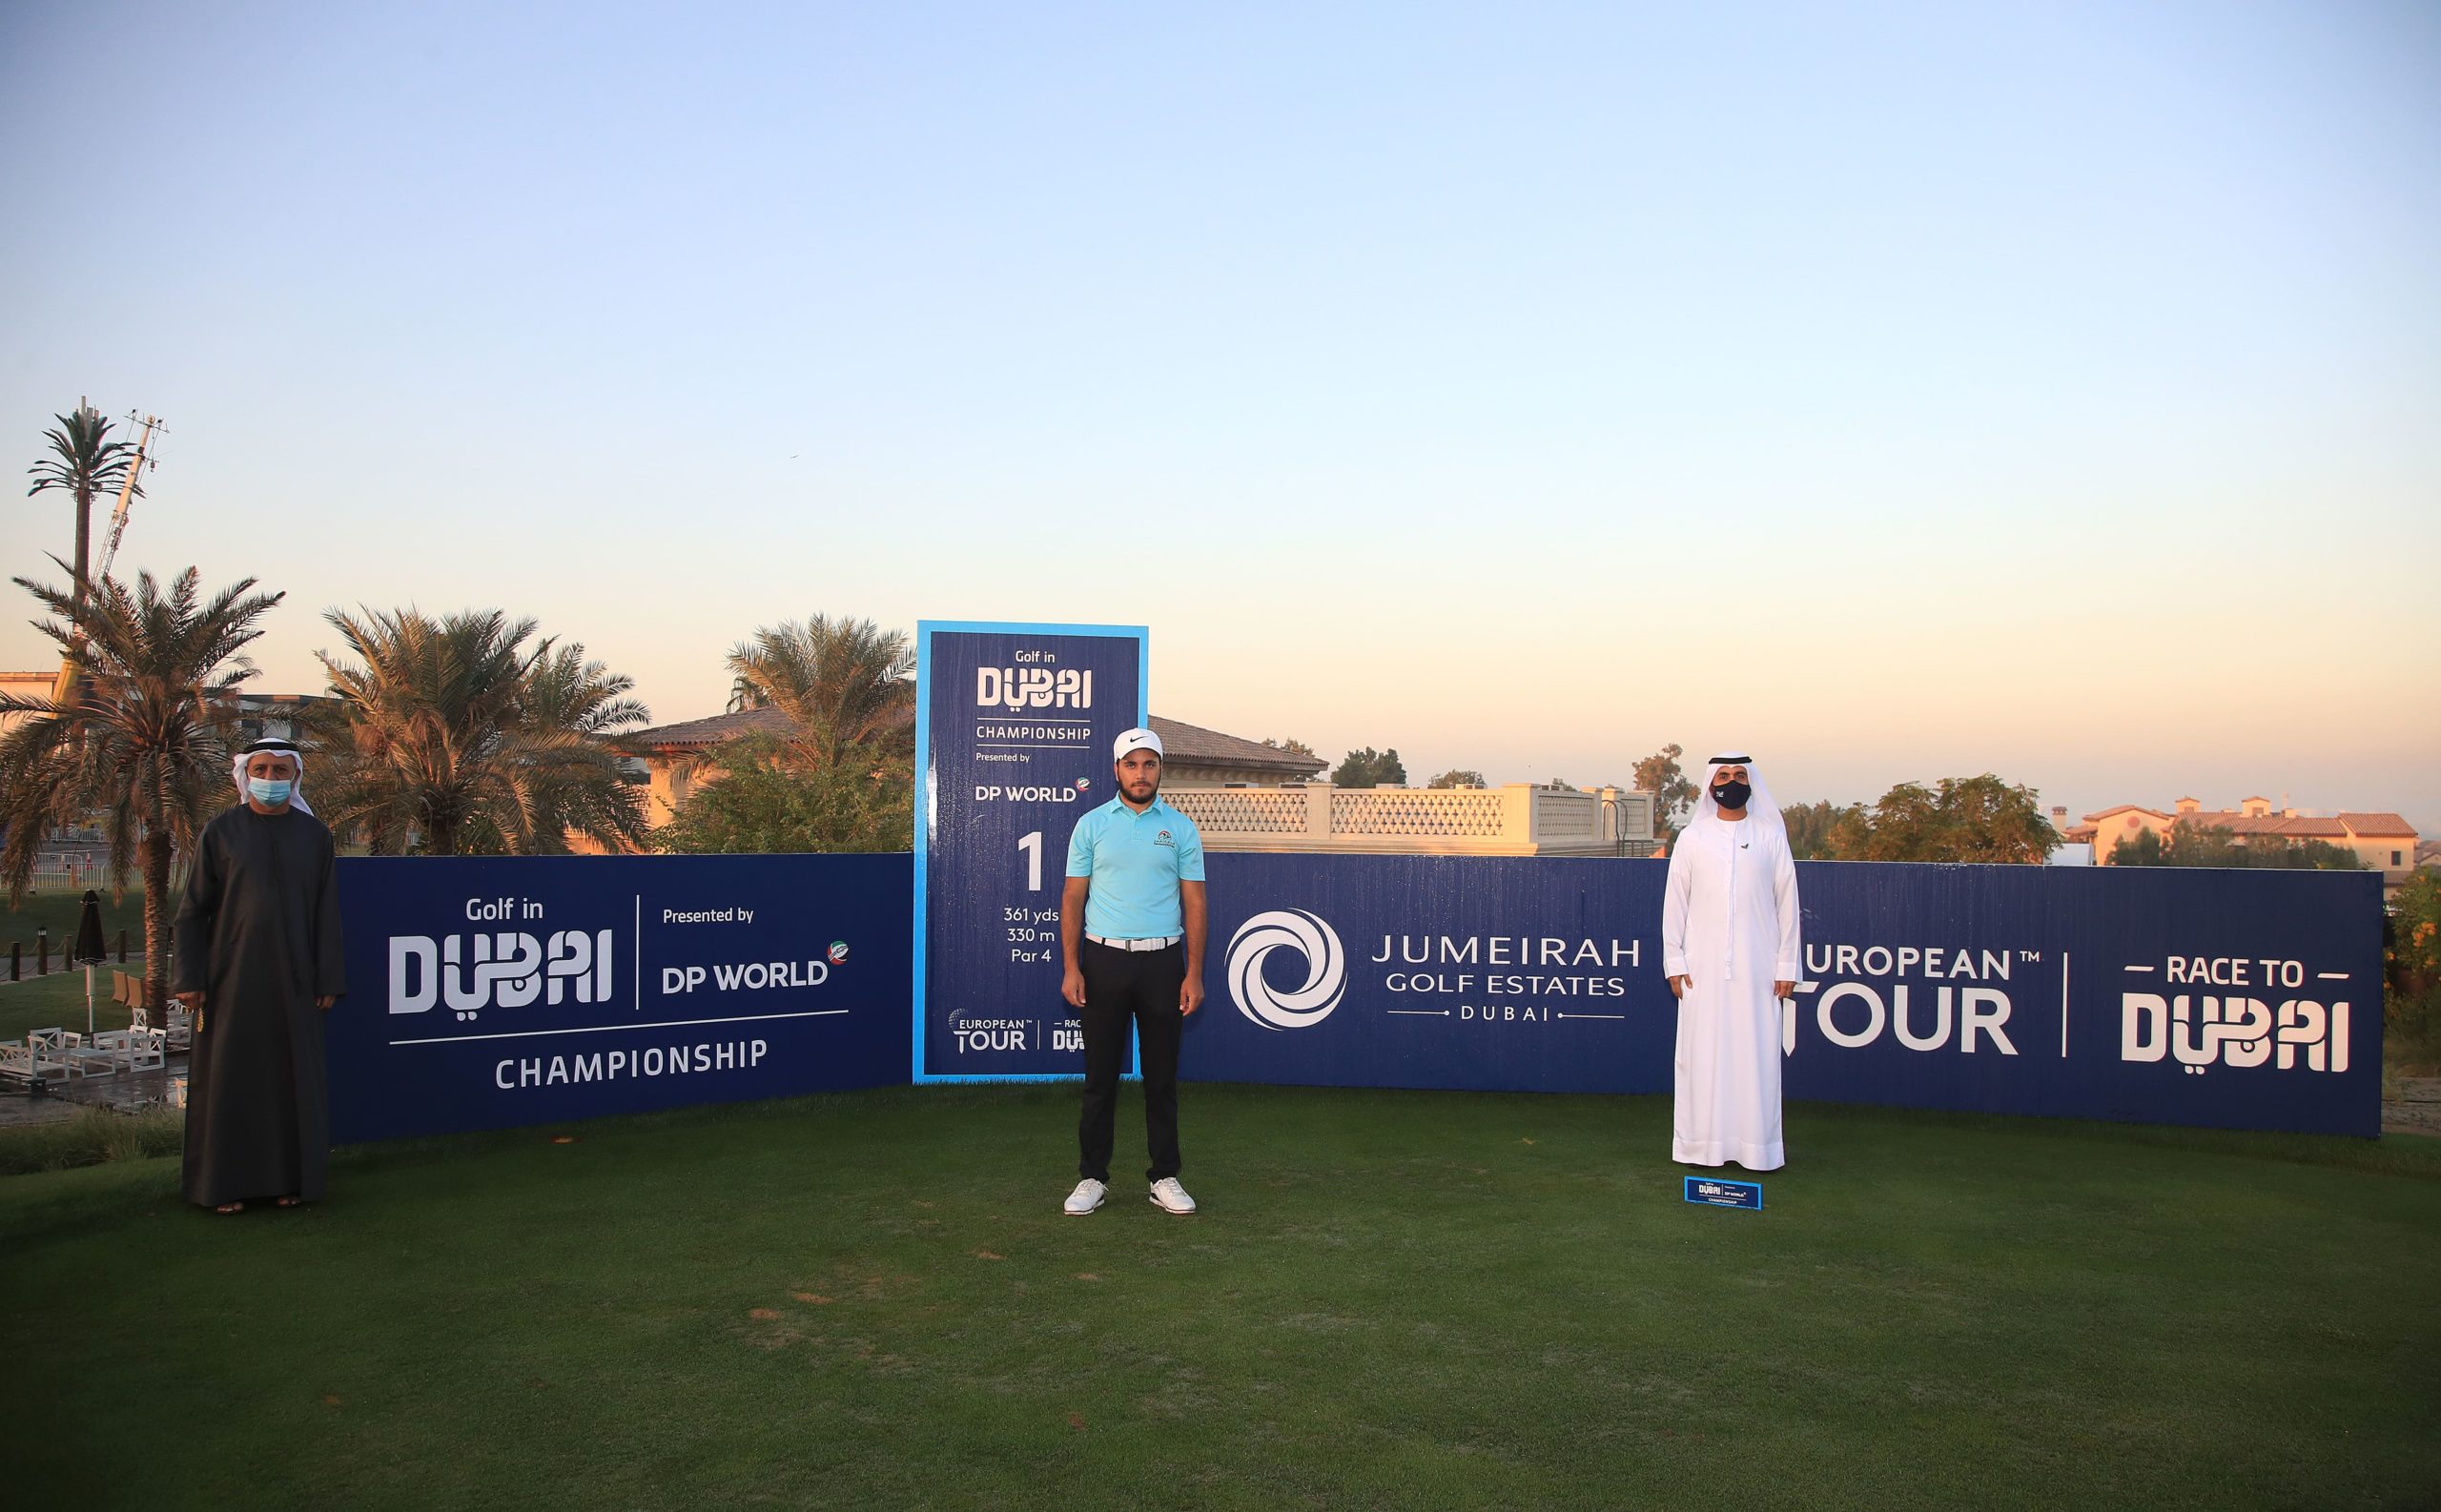 Golf in Dubai Championship, Final Round